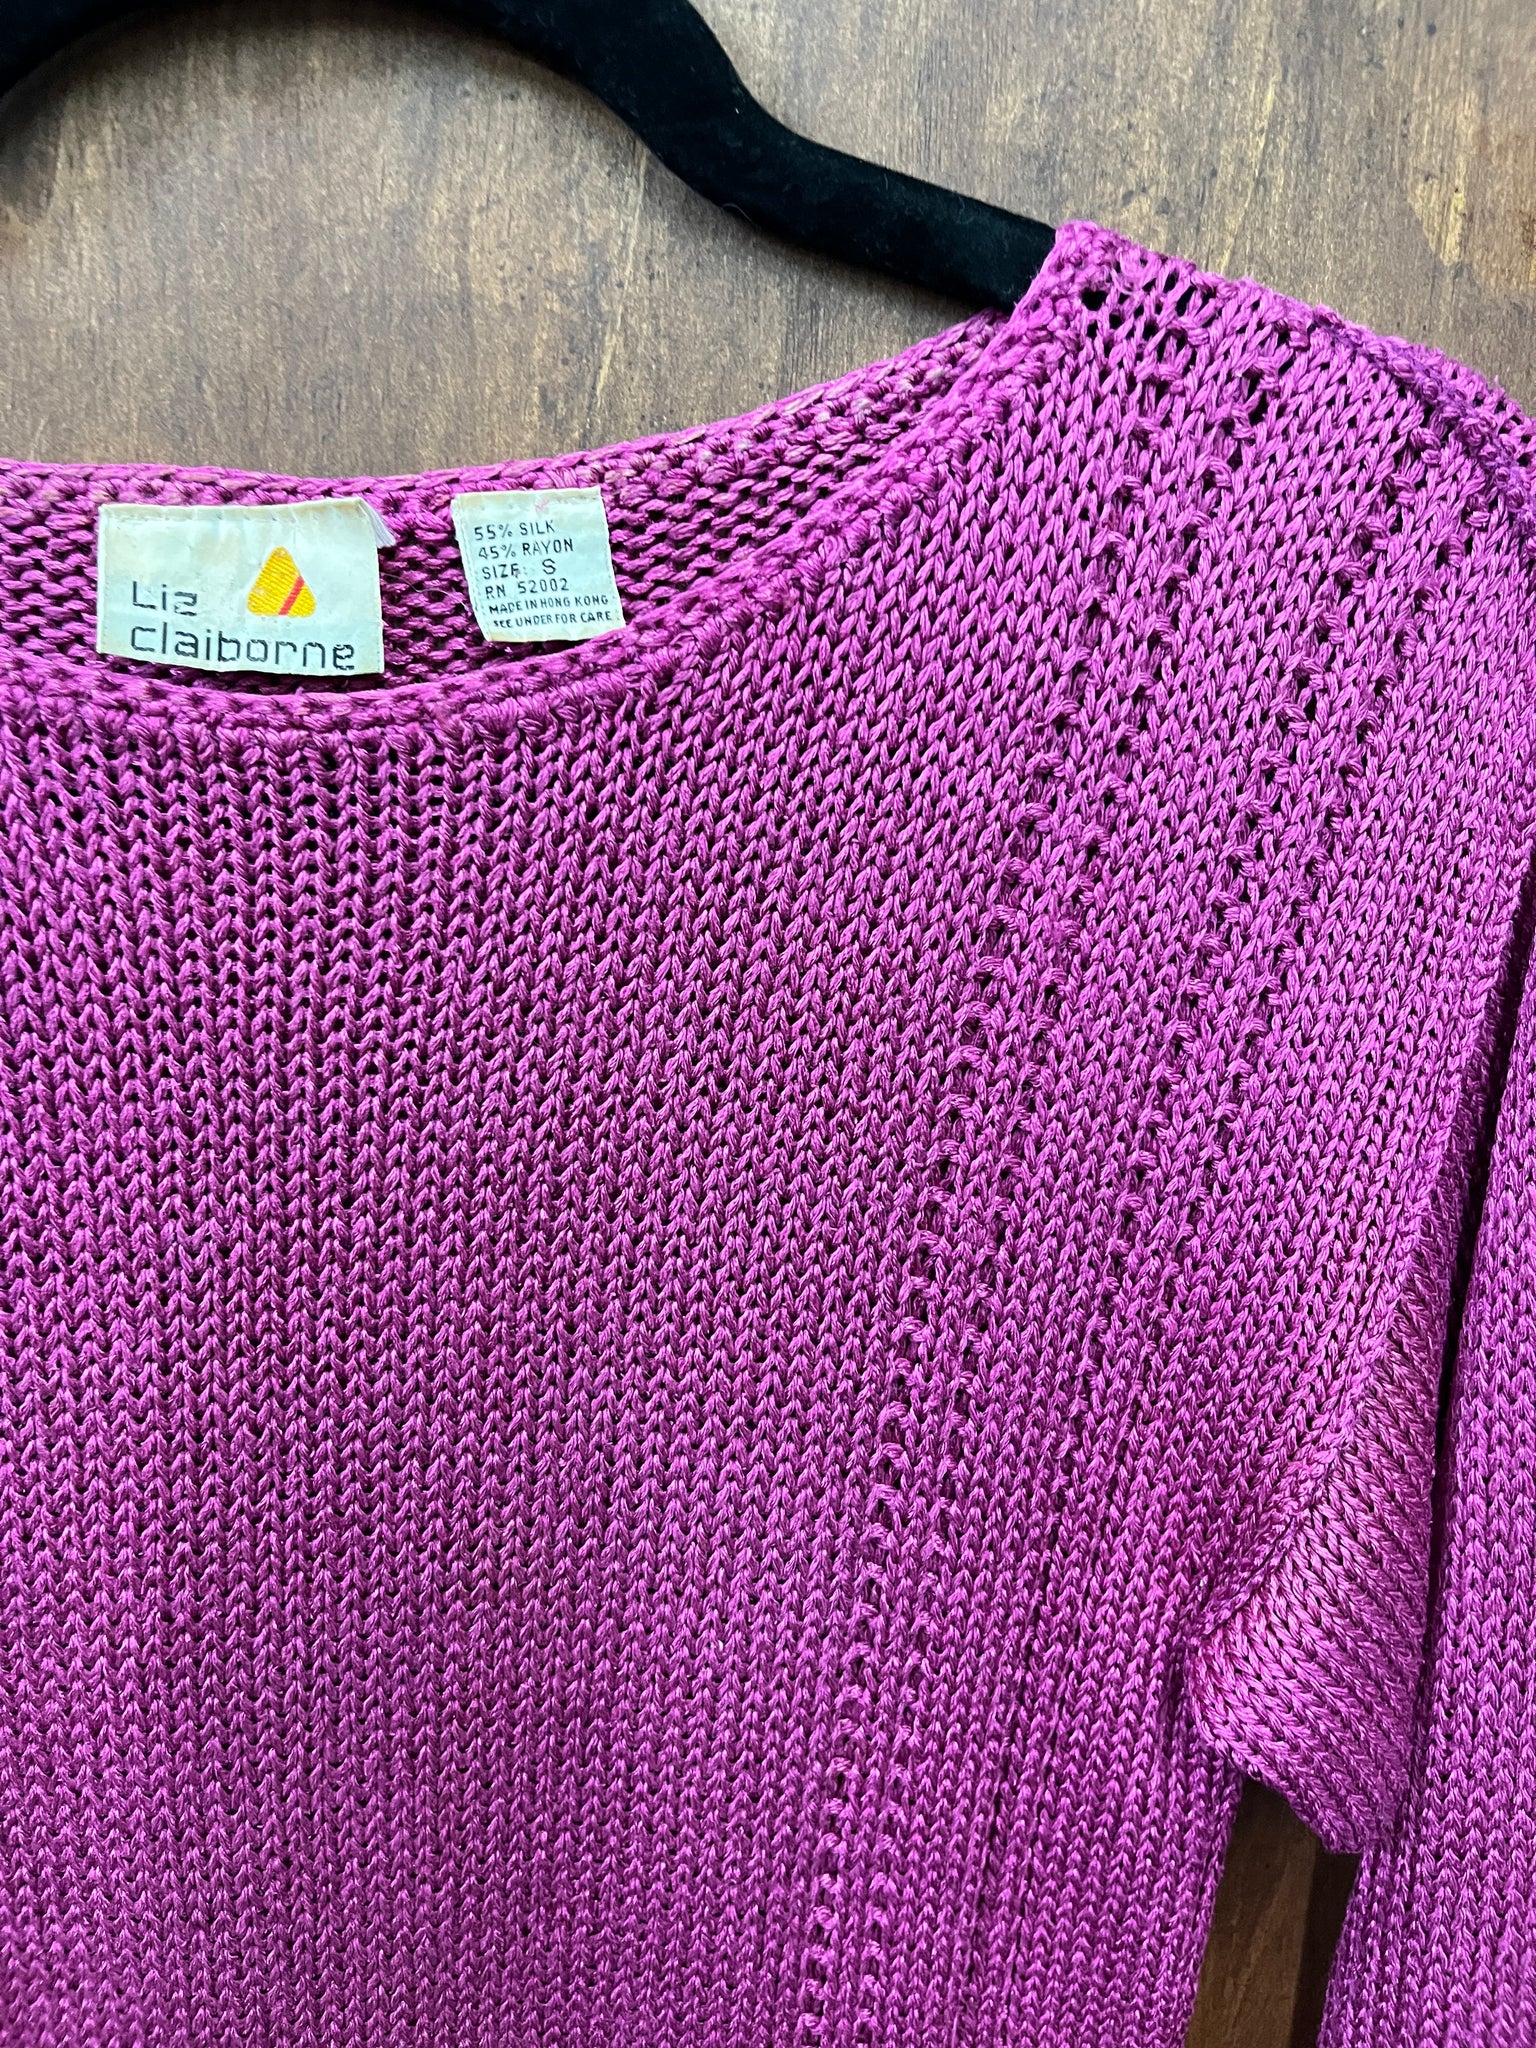 1990s SWEATER- Liz Claiborne magenta soft knit